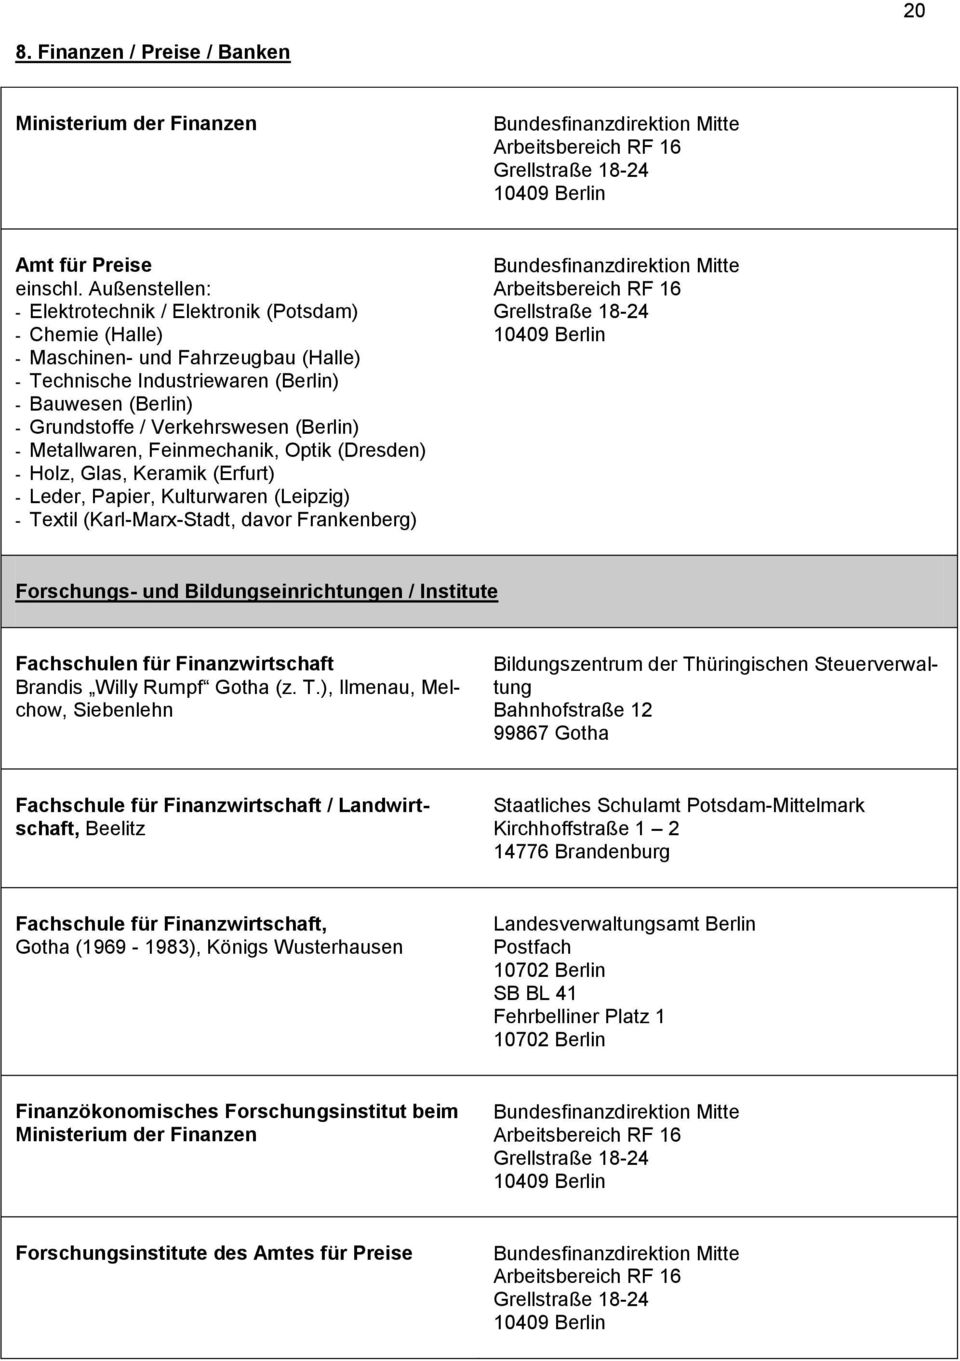 (Berlin) - Metallwaren, Feinmechanik, Optik (Dresden) - Holz, Glas, Keramik (Erfurt) - Leder, Papier, Kulturwaren (Leipzig) - Textil (Karl-Marx-Stadt, davor Frankenberg) Bundesfinanzdirektion Mitte